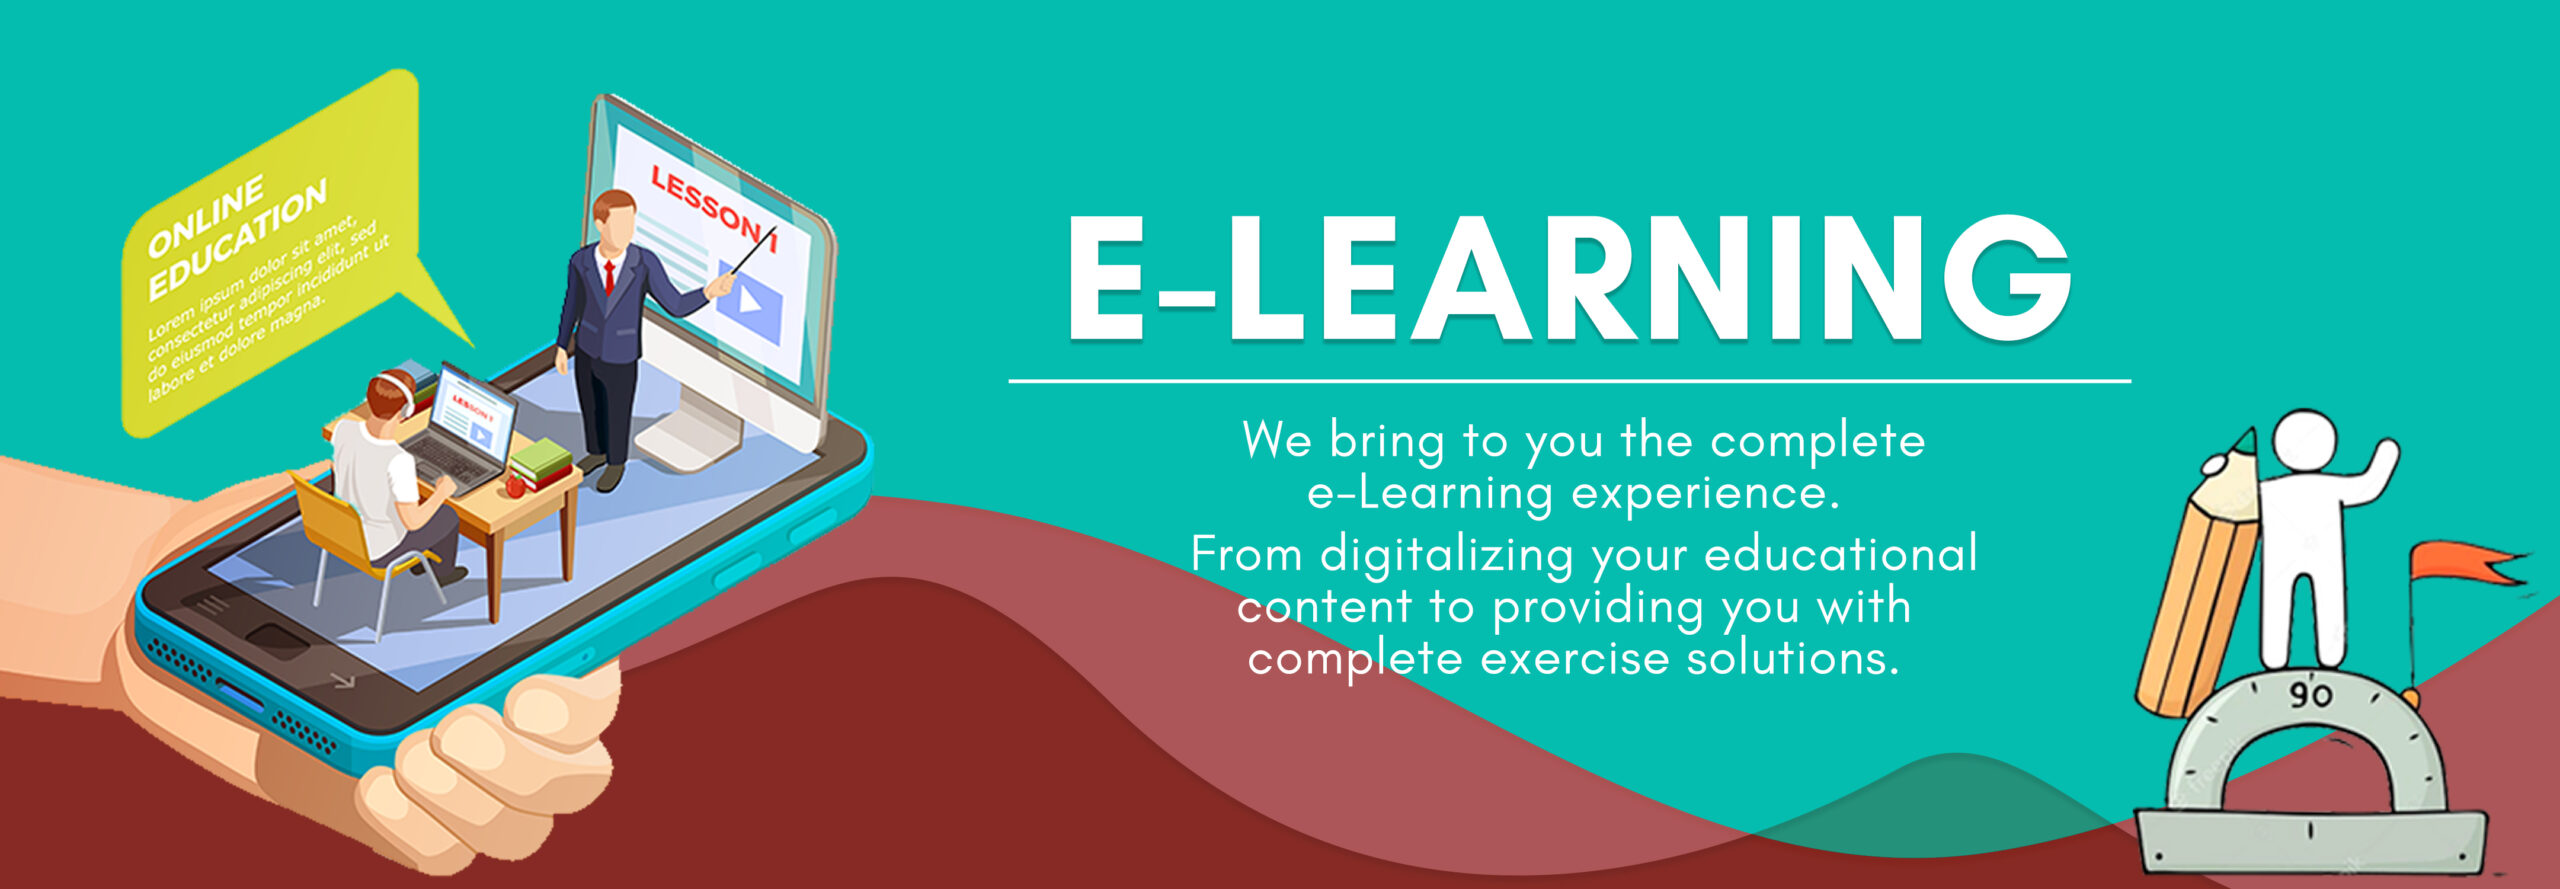 E-learning hd